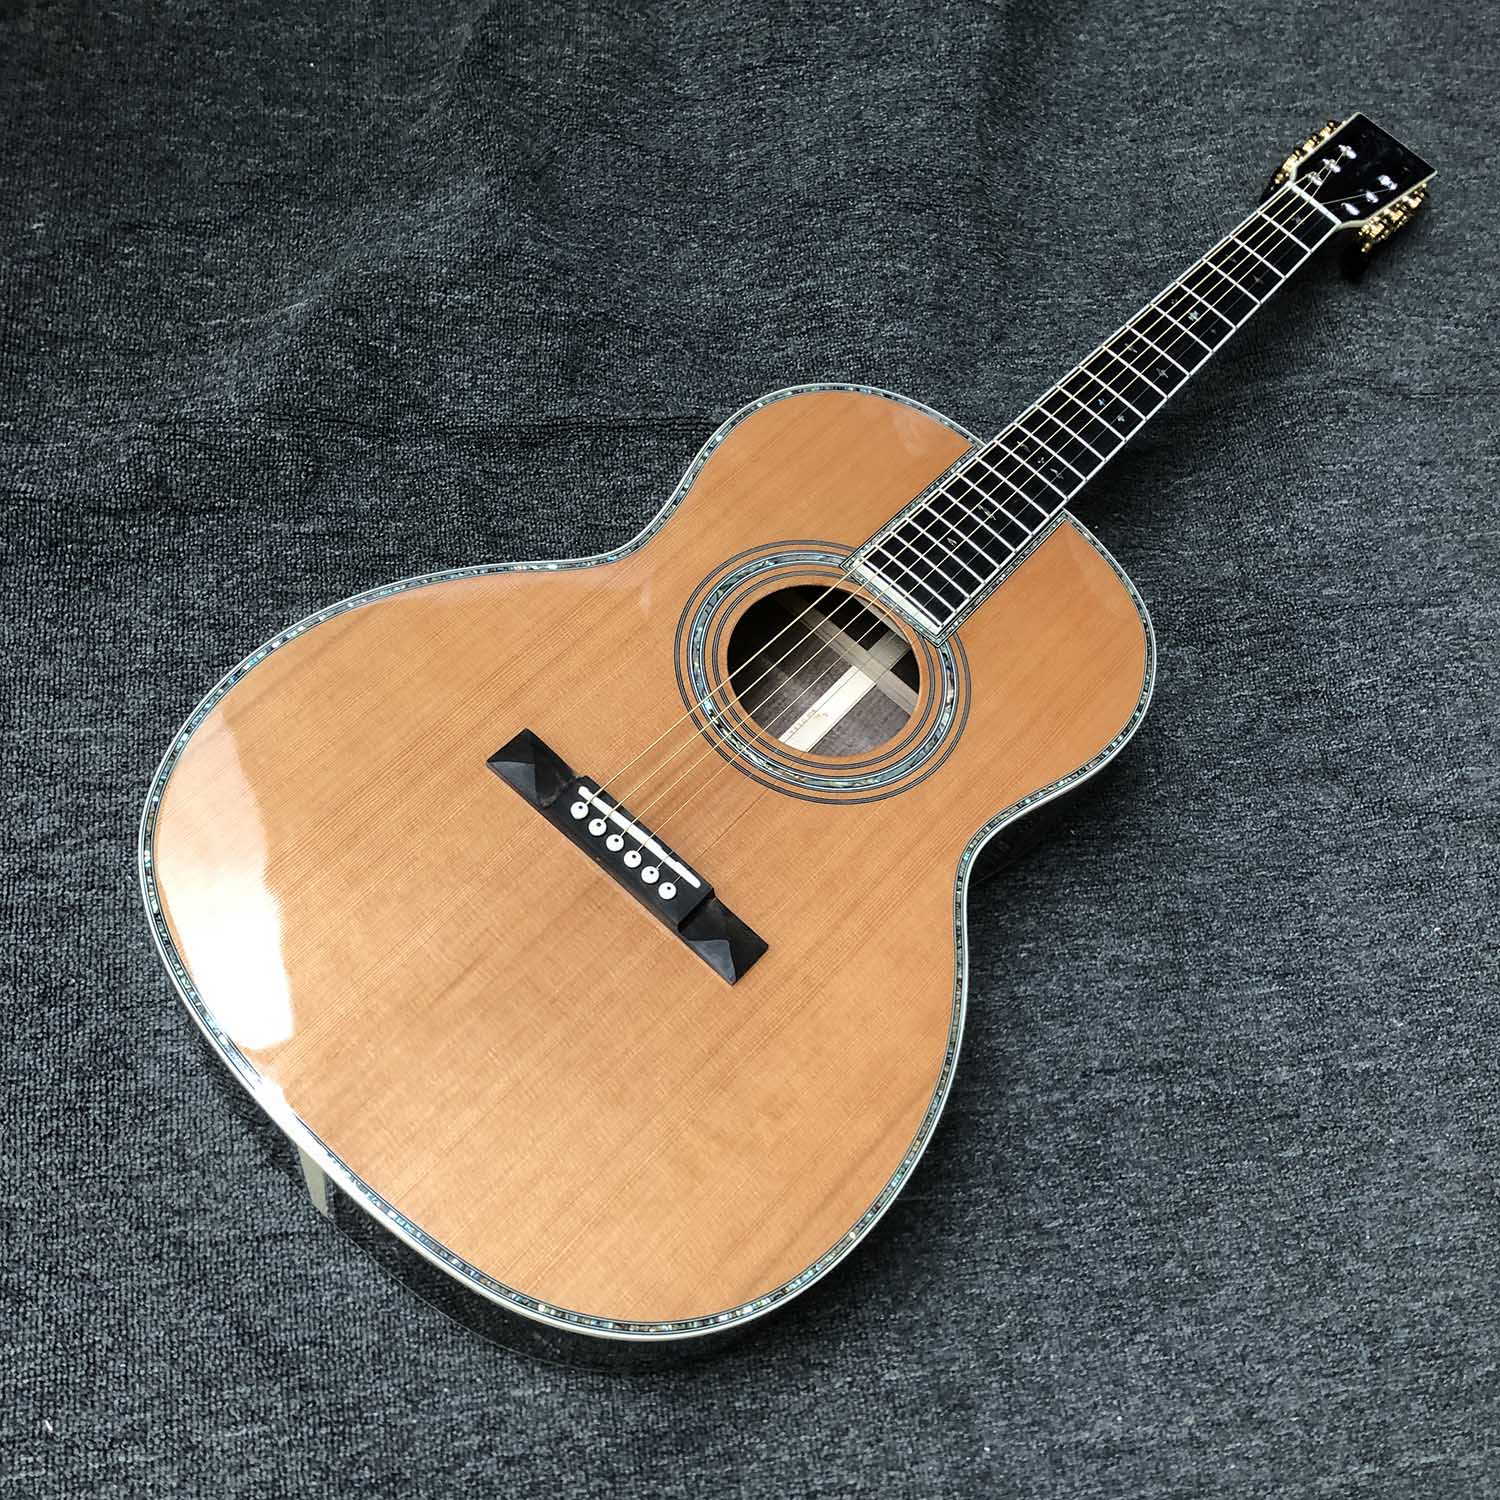 Solide ceder hout akoestische gitaar met soundhole pick -up 39 inch ooo carrosserie levensboom inlay klassieke folk gitaar abalone binding